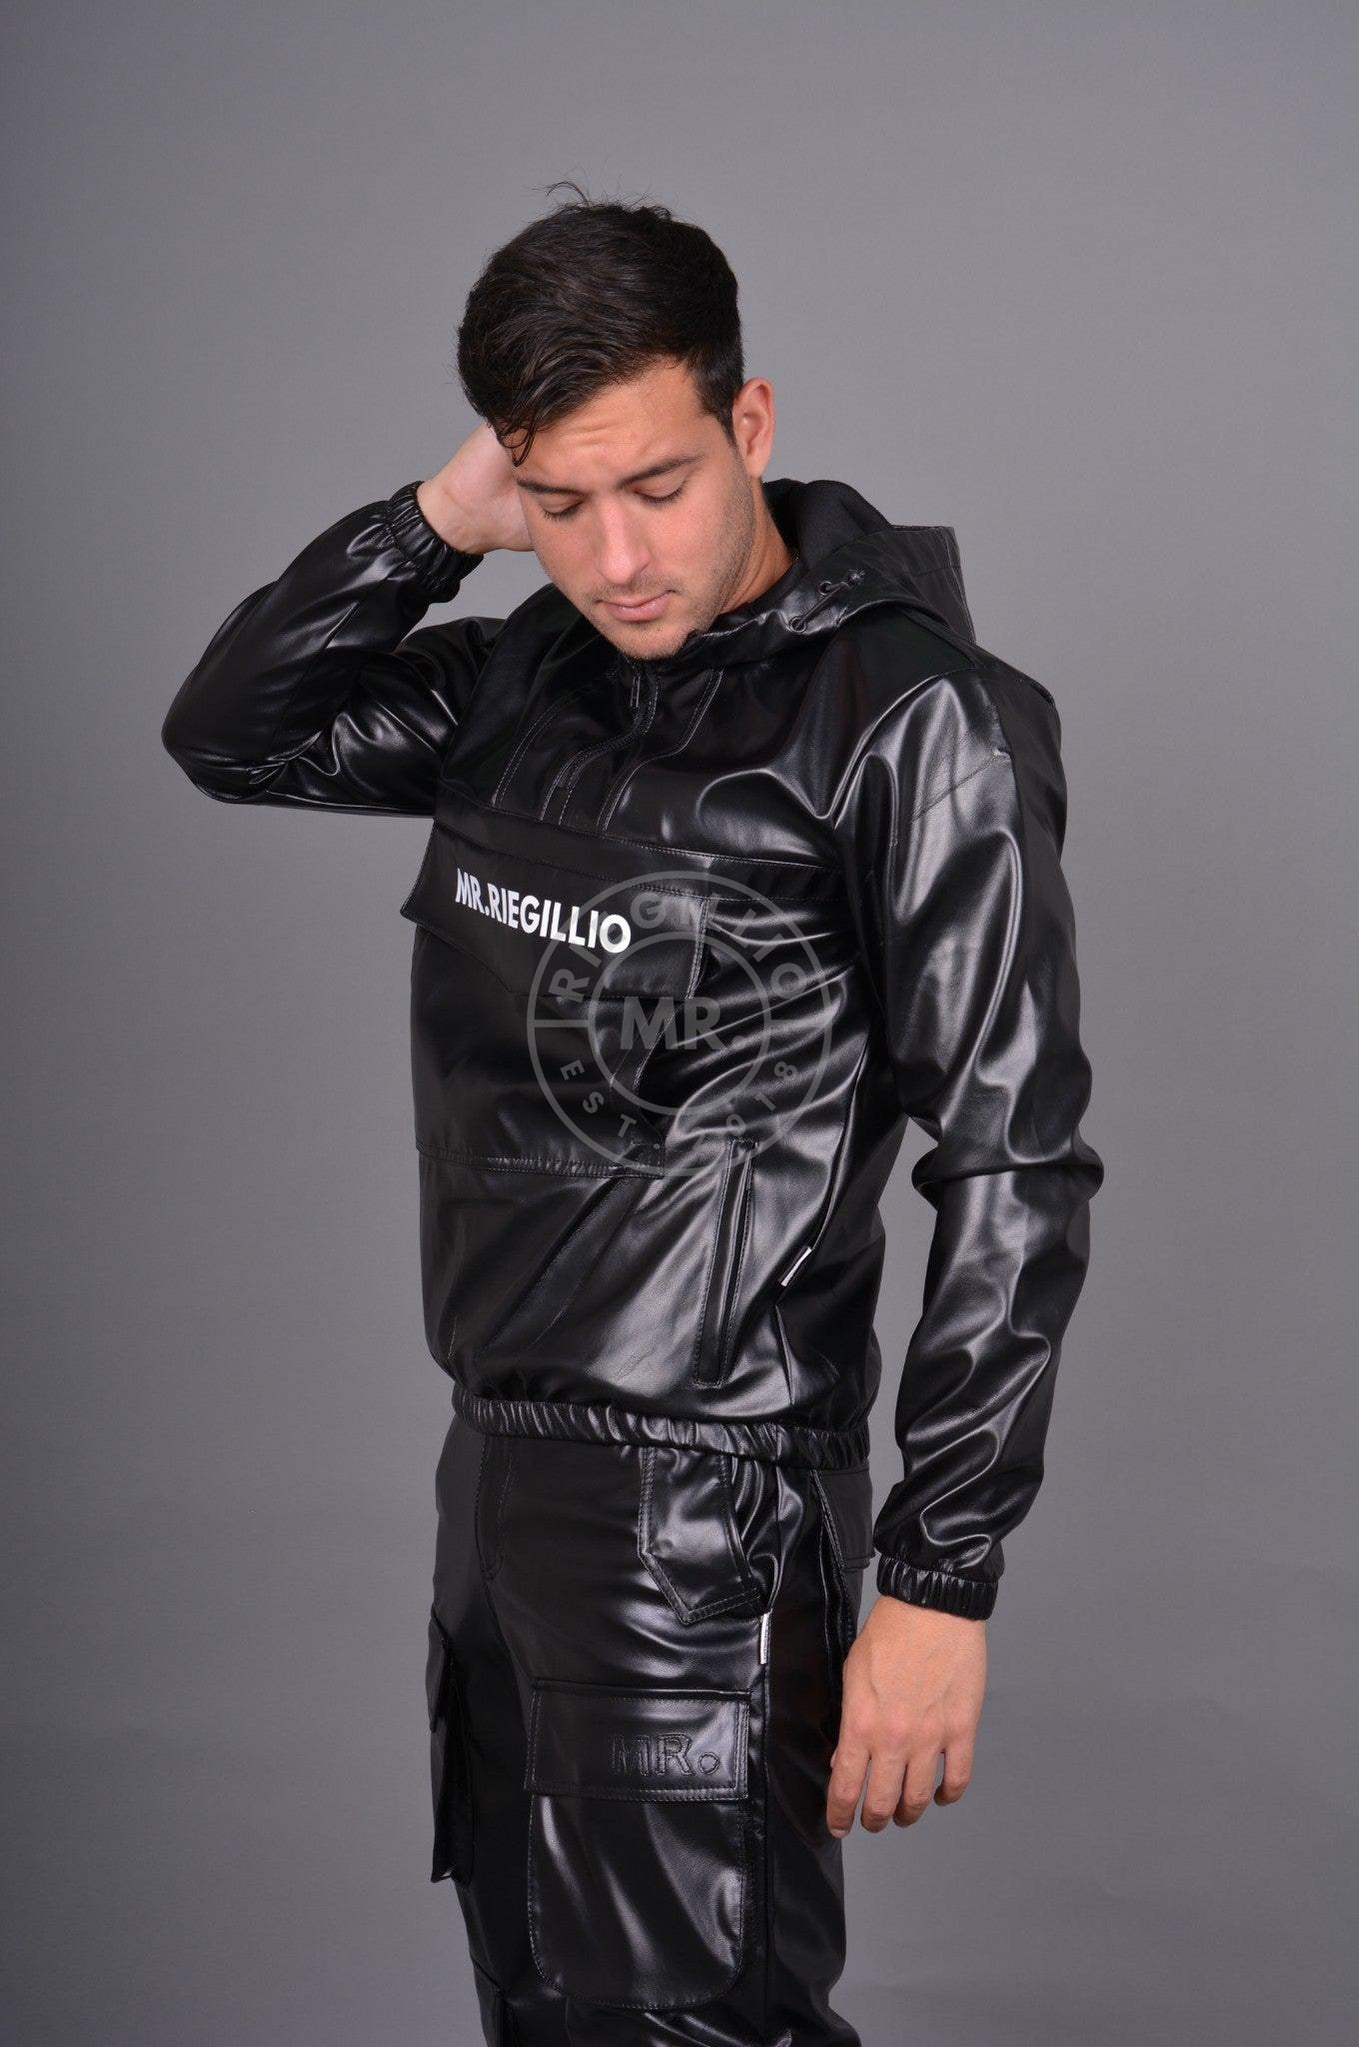 Black Leather Utility Jacket - Men - Size: 3XL / Black - Mr. Riegillio